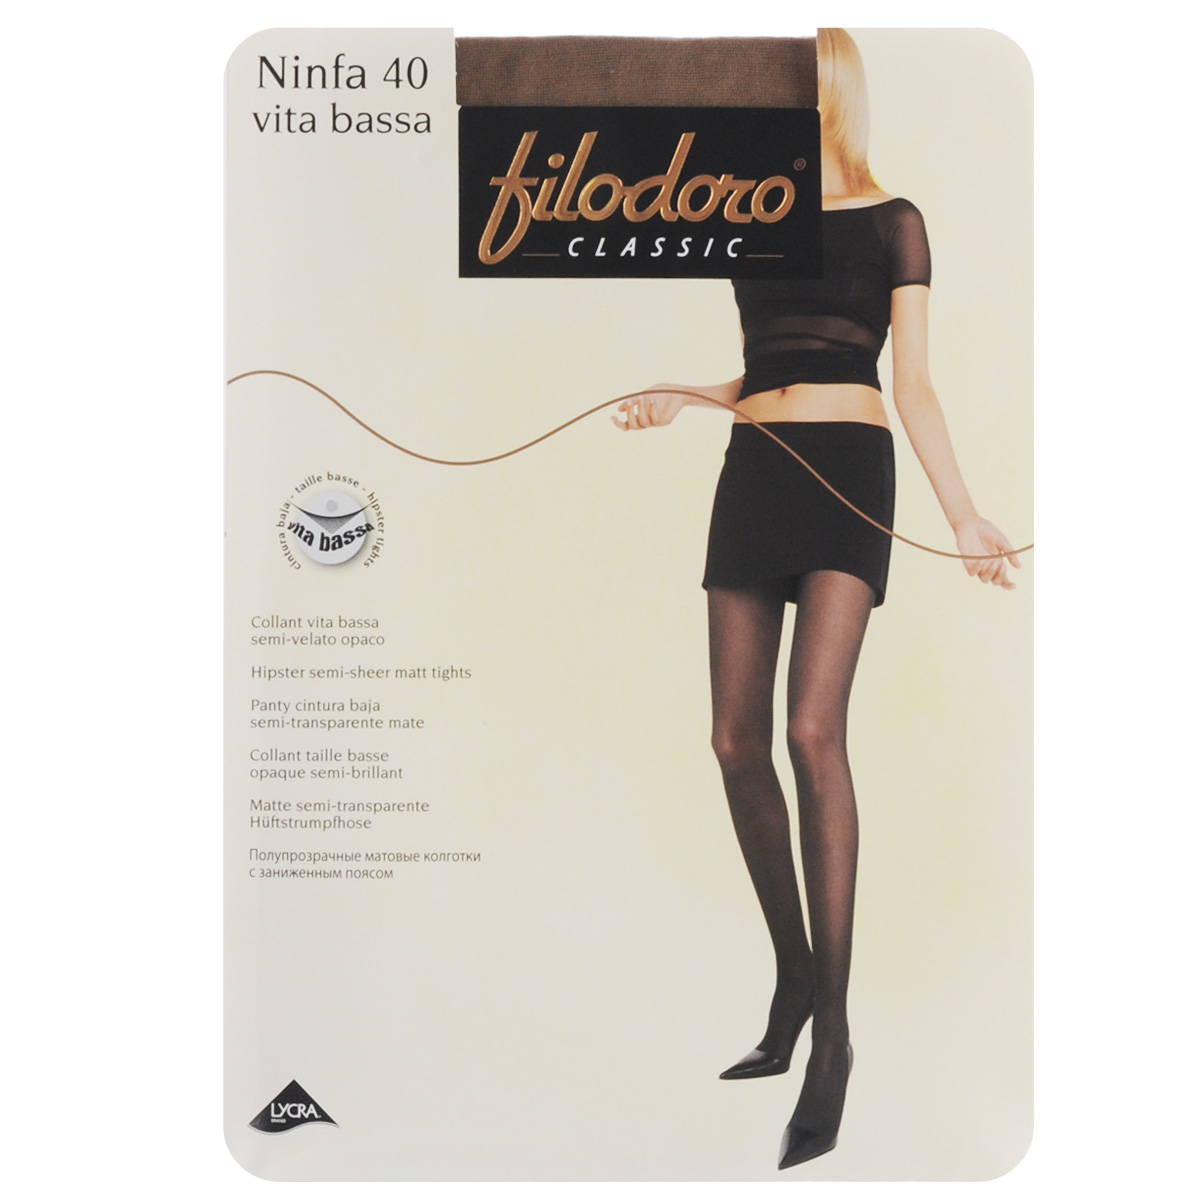 Колготки женские Filodoro Classic Ninfa 40 Vita Bassa, цвет: Glace (коричневый). C115060FC. Размер 4 (L)